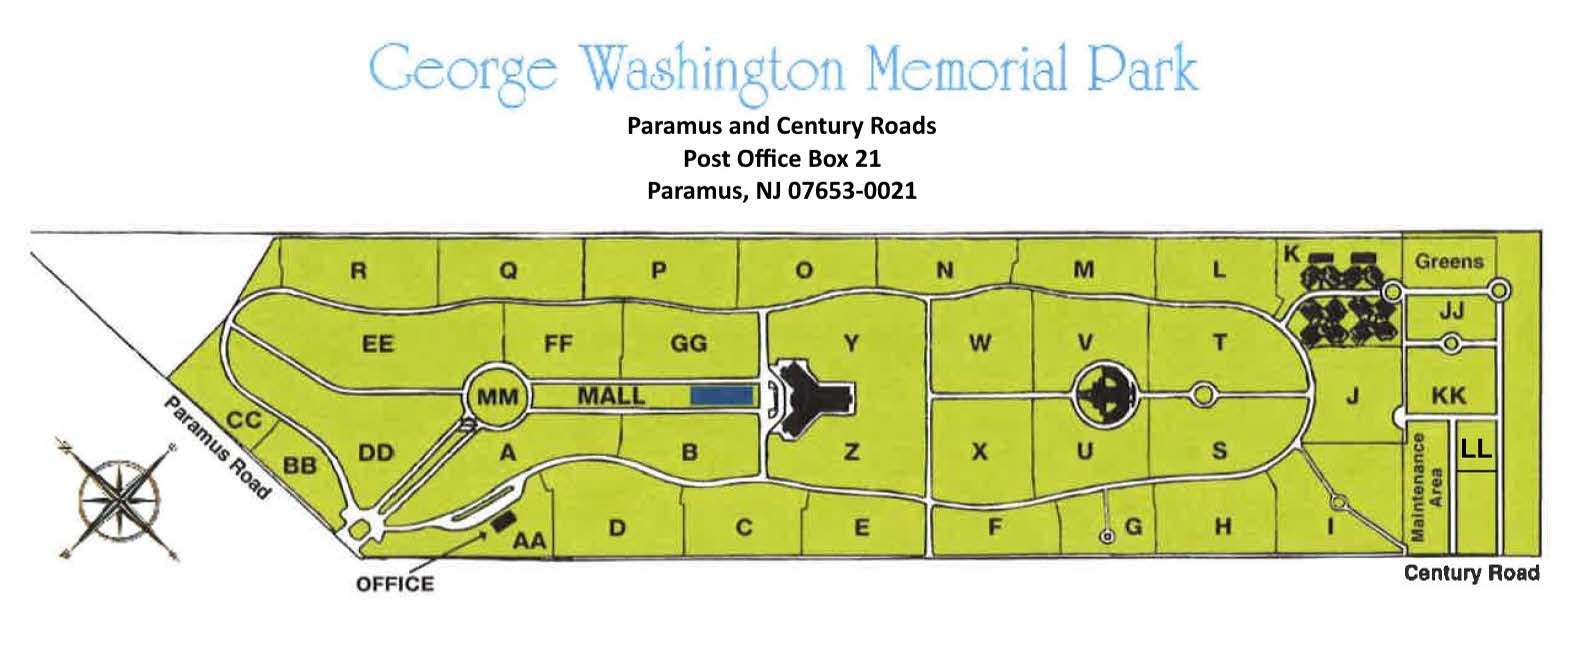 Map of George Washington Memorial Park in Paramus, New Jersey